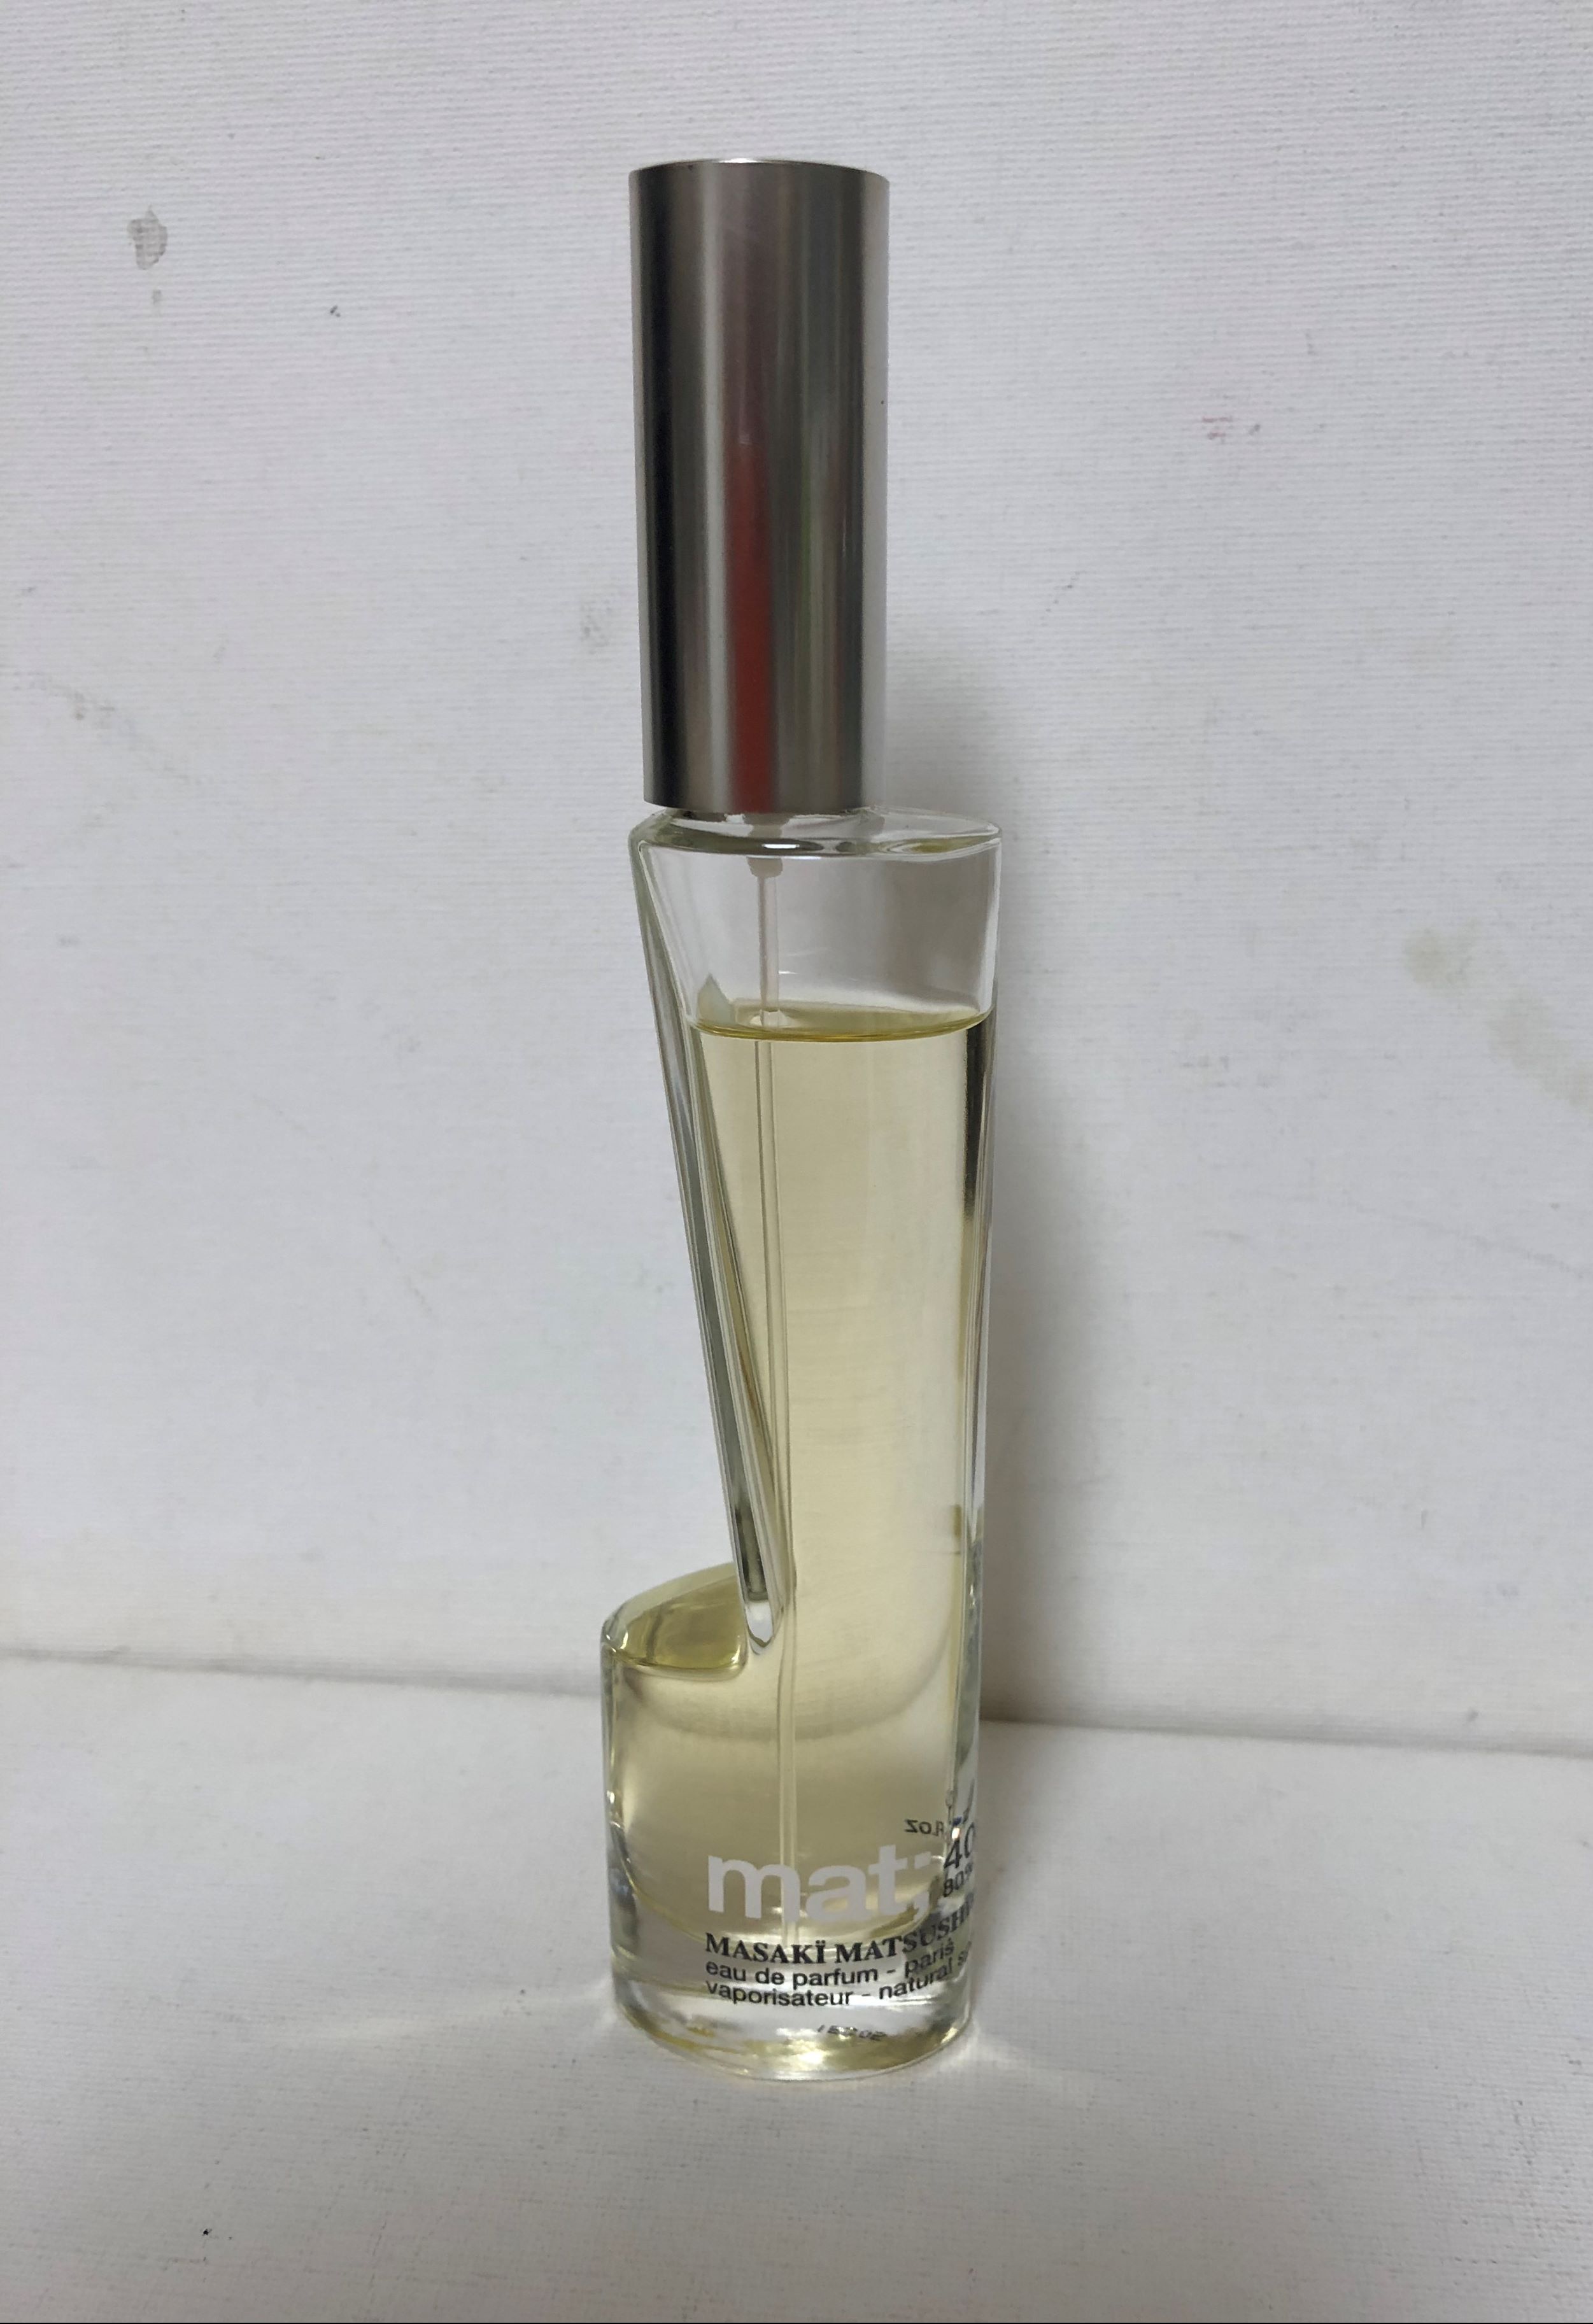 Mat Masaki Matsushima Eau De Parfum EDP Spray for Women- 1.35 oz - New ...